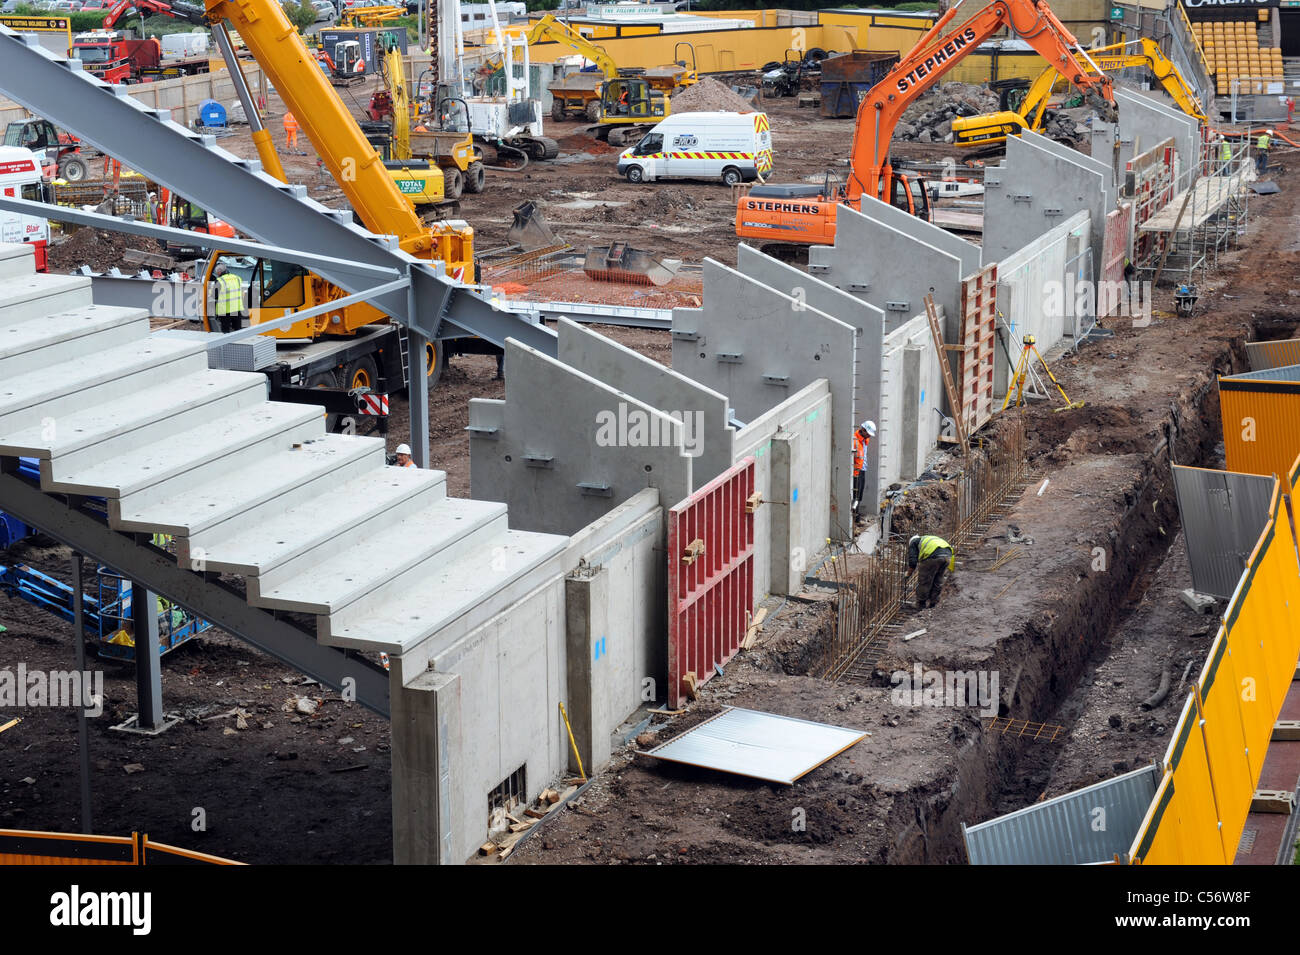 Football stadium under construction at Molineux Wolverhampton Uk Stock Photo